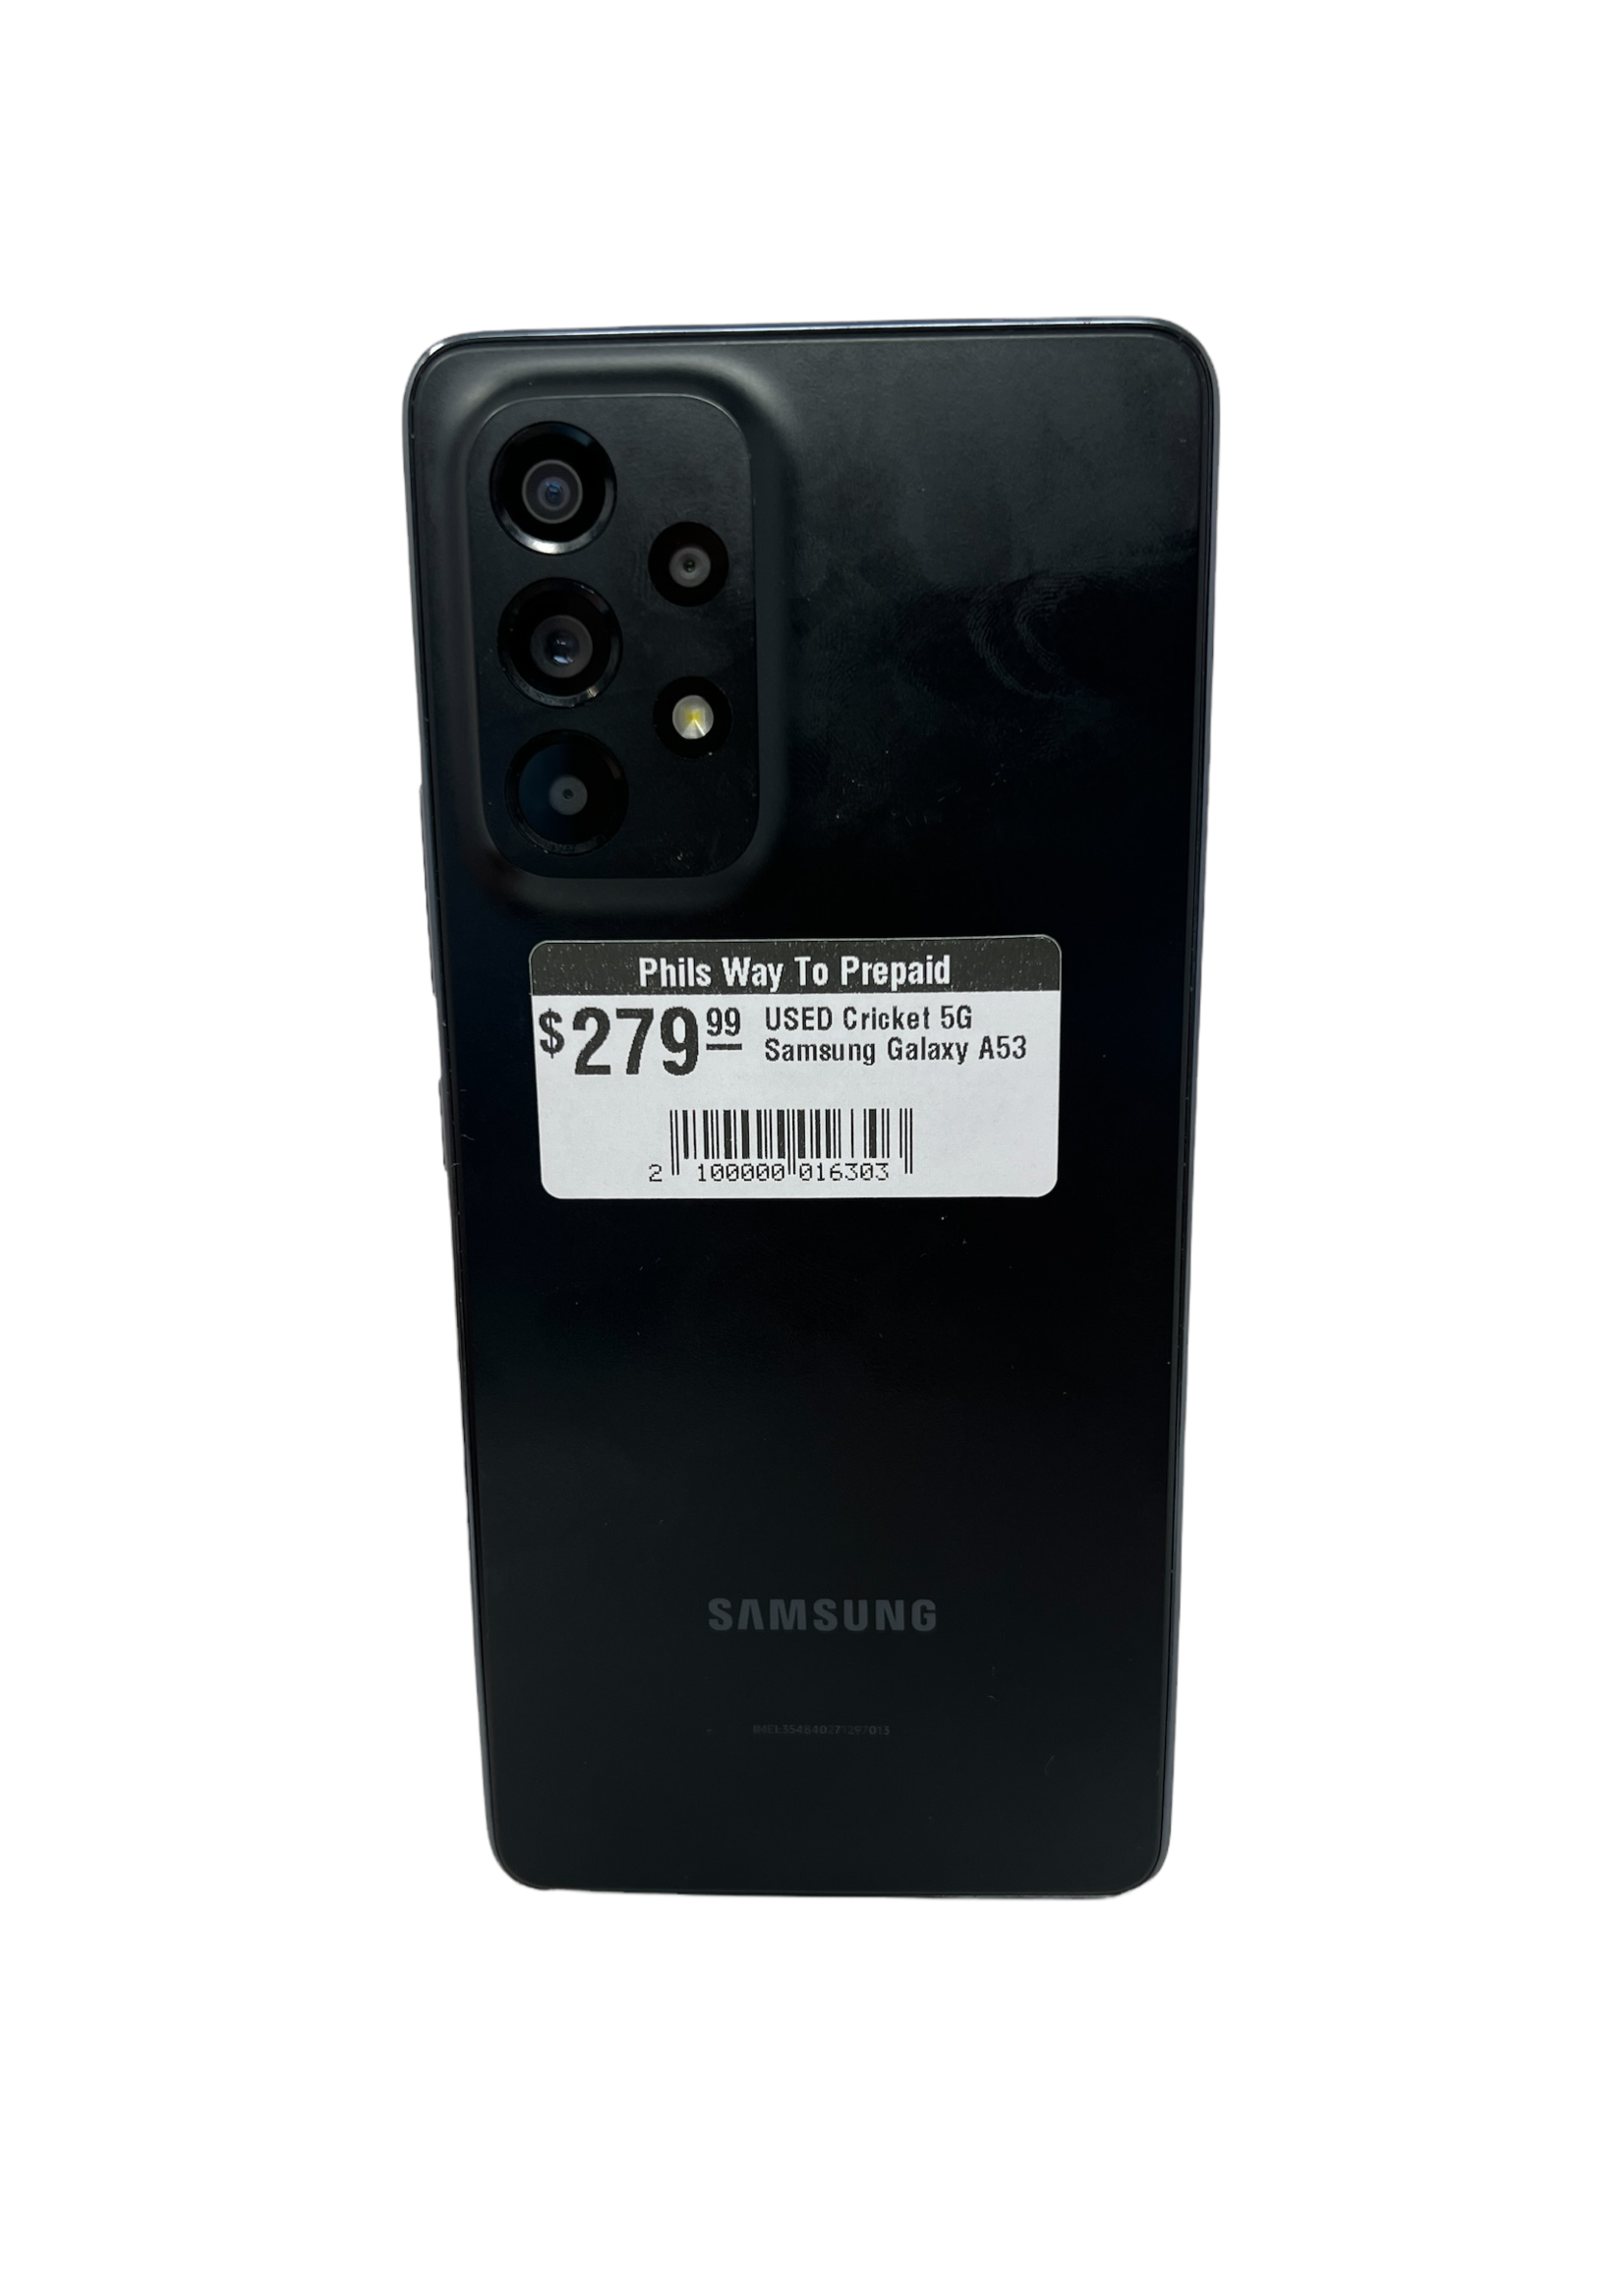 Cricket USED Cricket 5G Samsung Galaxy A53